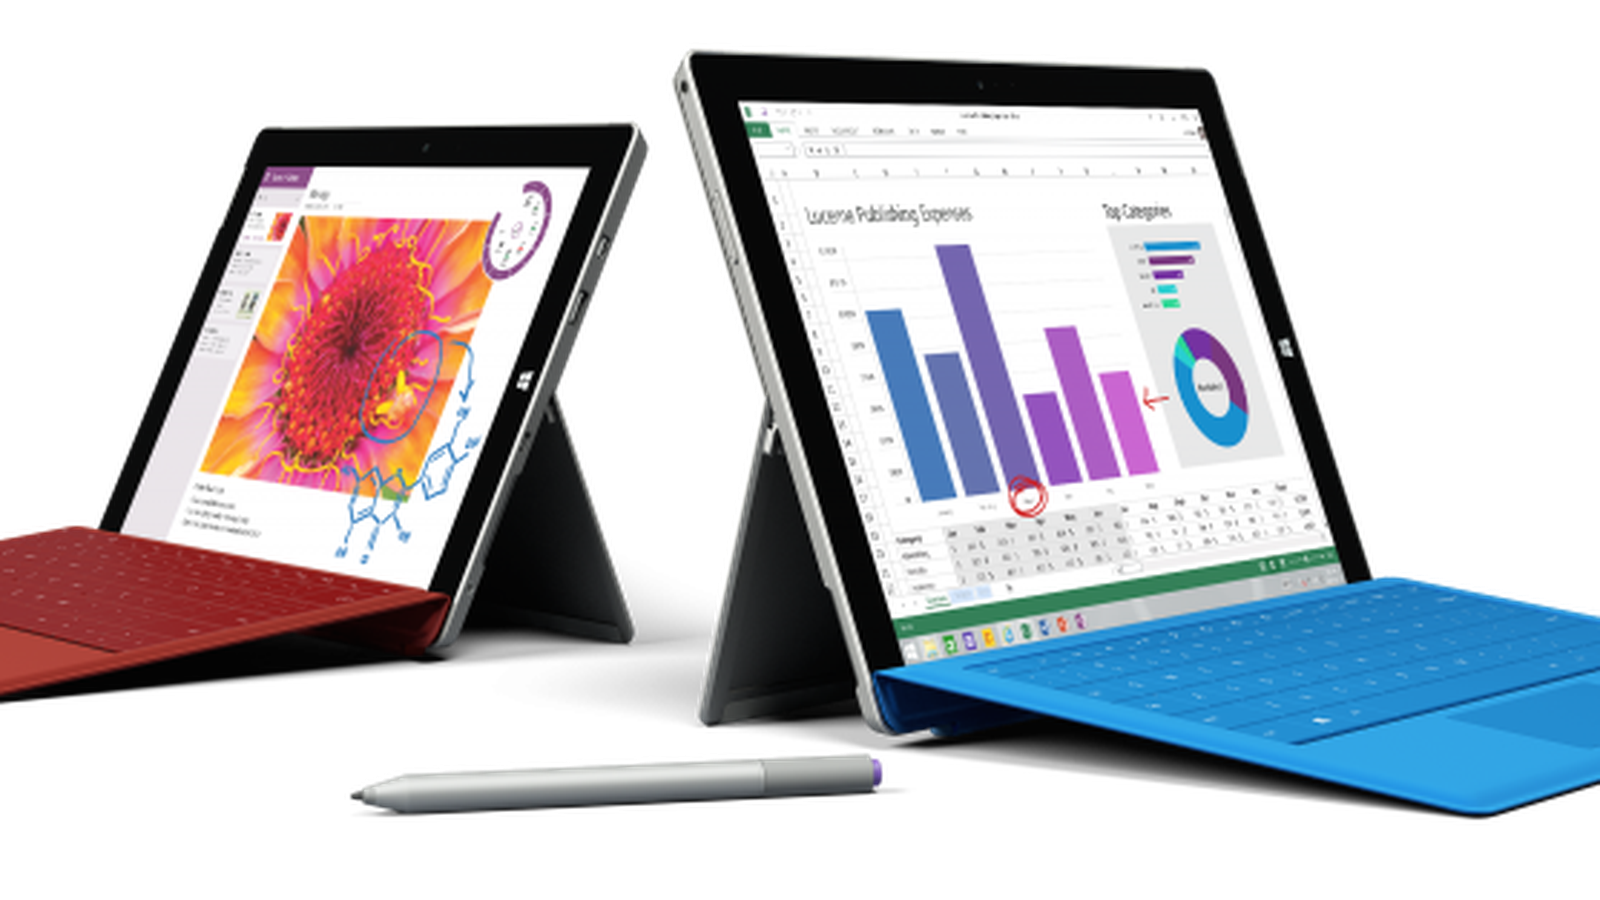 Microsoft Announces Intel Atom-Based Surface 3 With Windows 8.1